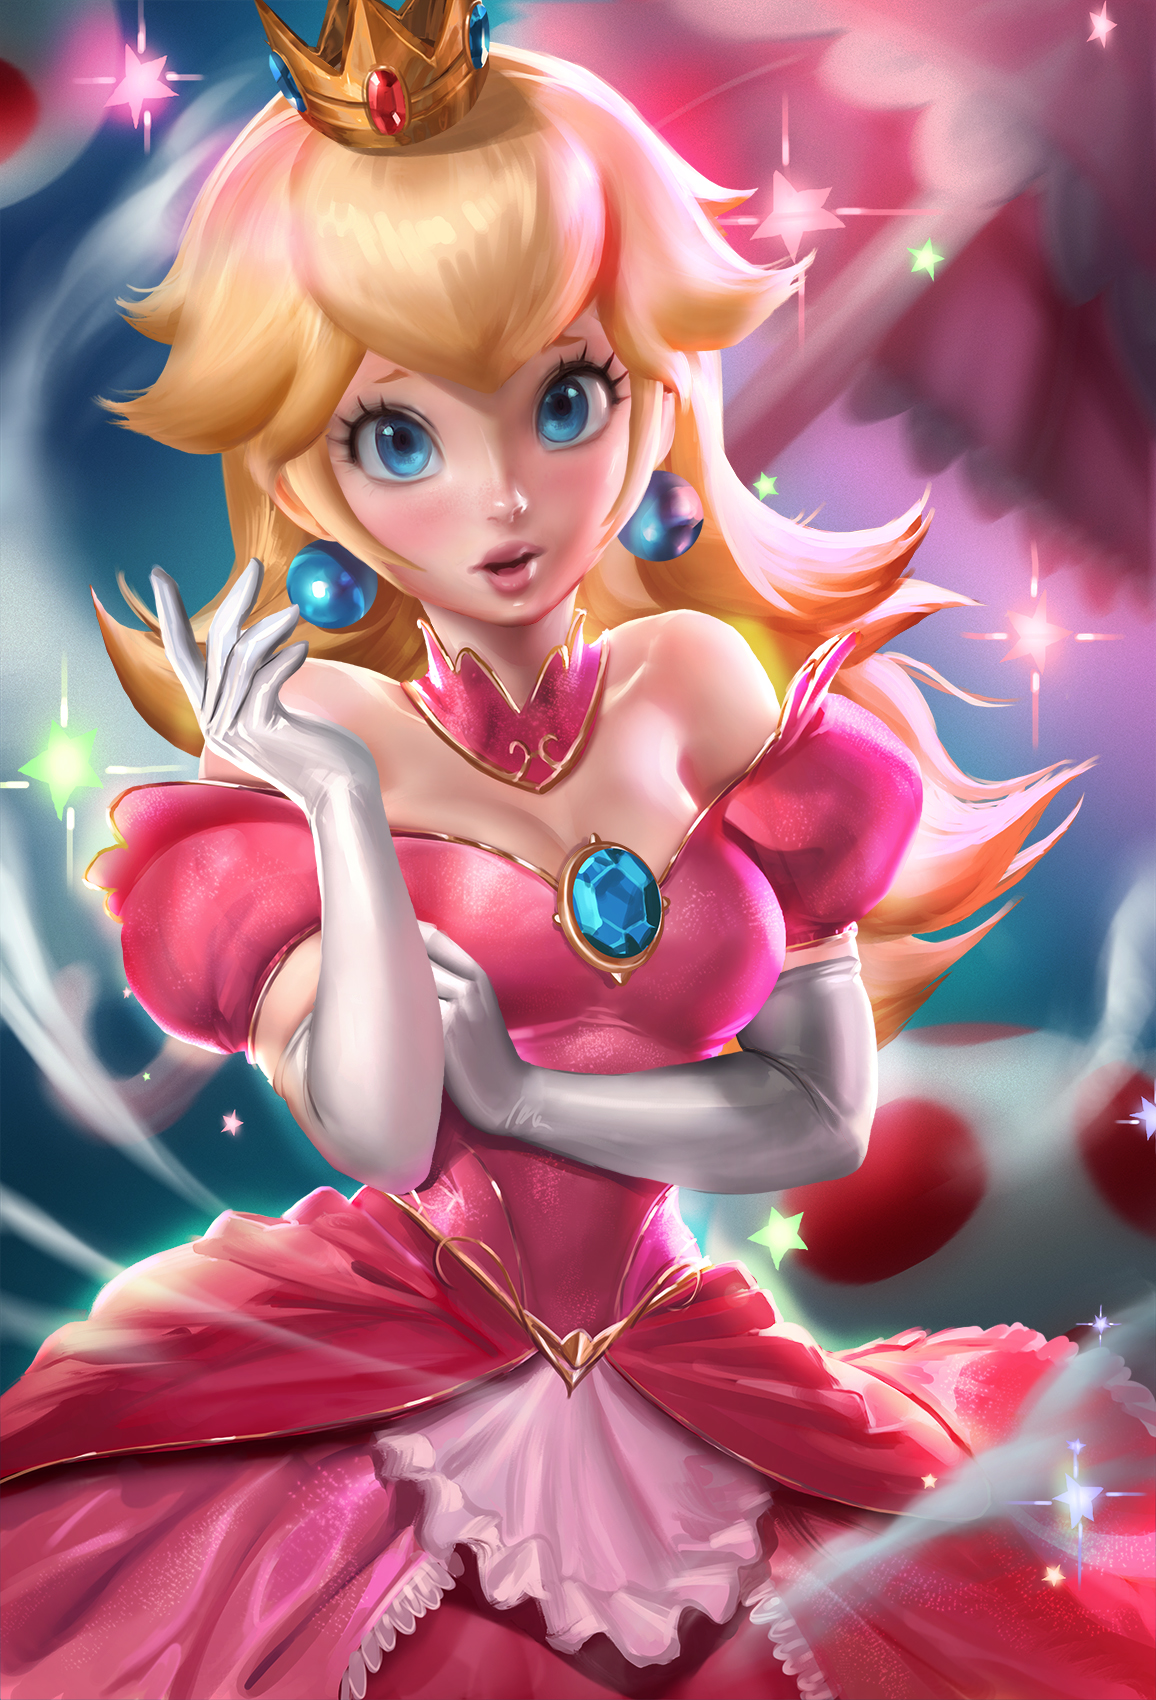 Anime 1156x1700 Sakimichan dress cleavage Mario Bros. Princess Peach video game girls video game characters video game art Nintendo fan art